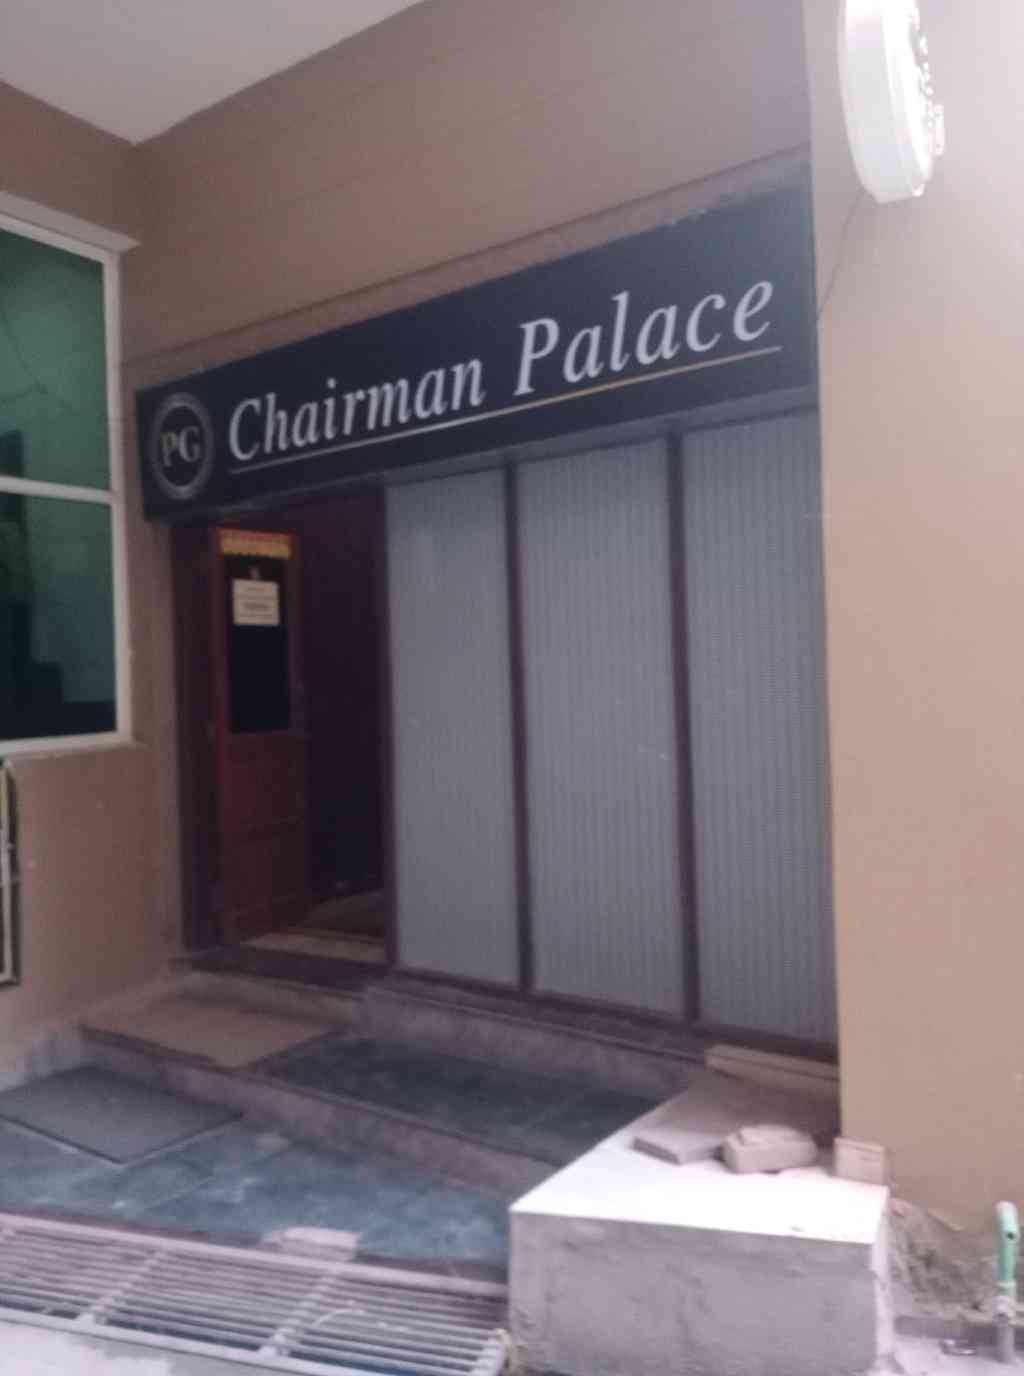 Chairman Palace PG